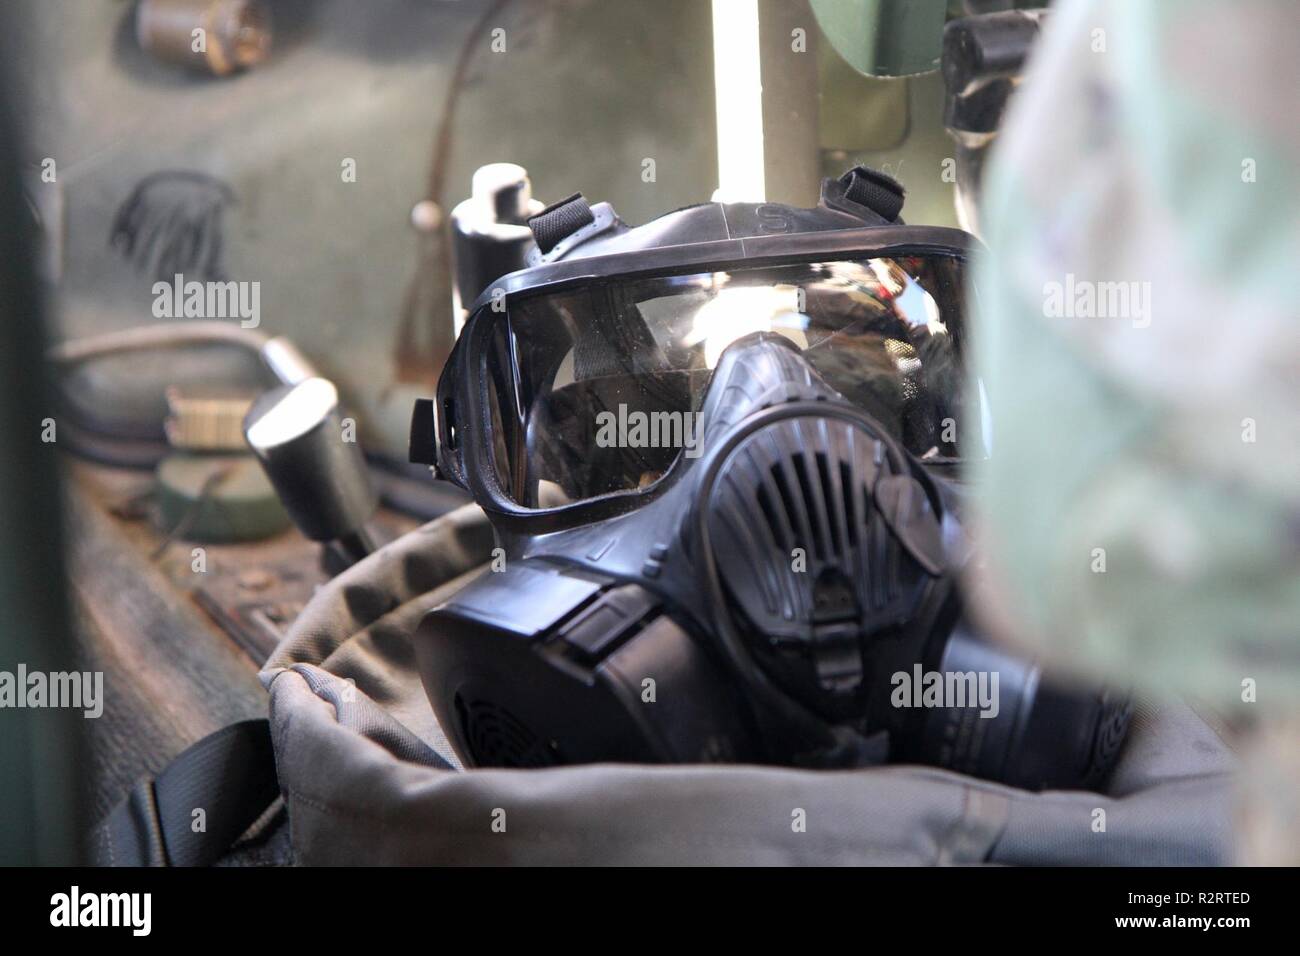 M50 US Military Respirator Gas Mask